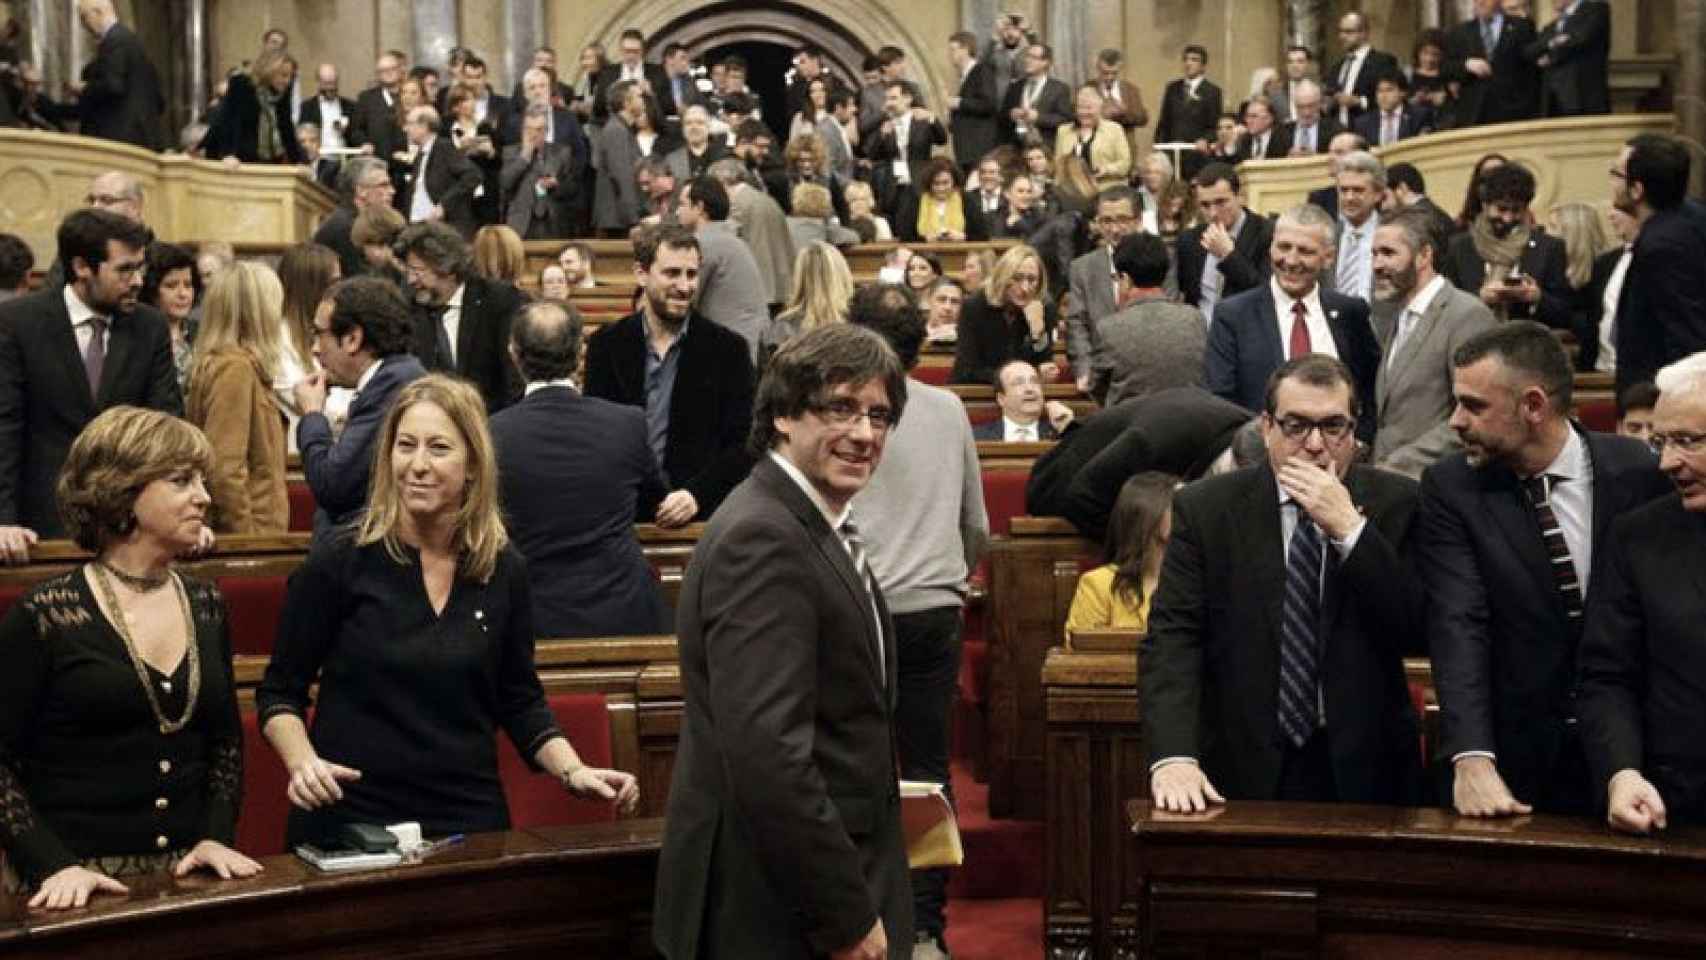 Carles Puigdemont (centro) en el Parlament.